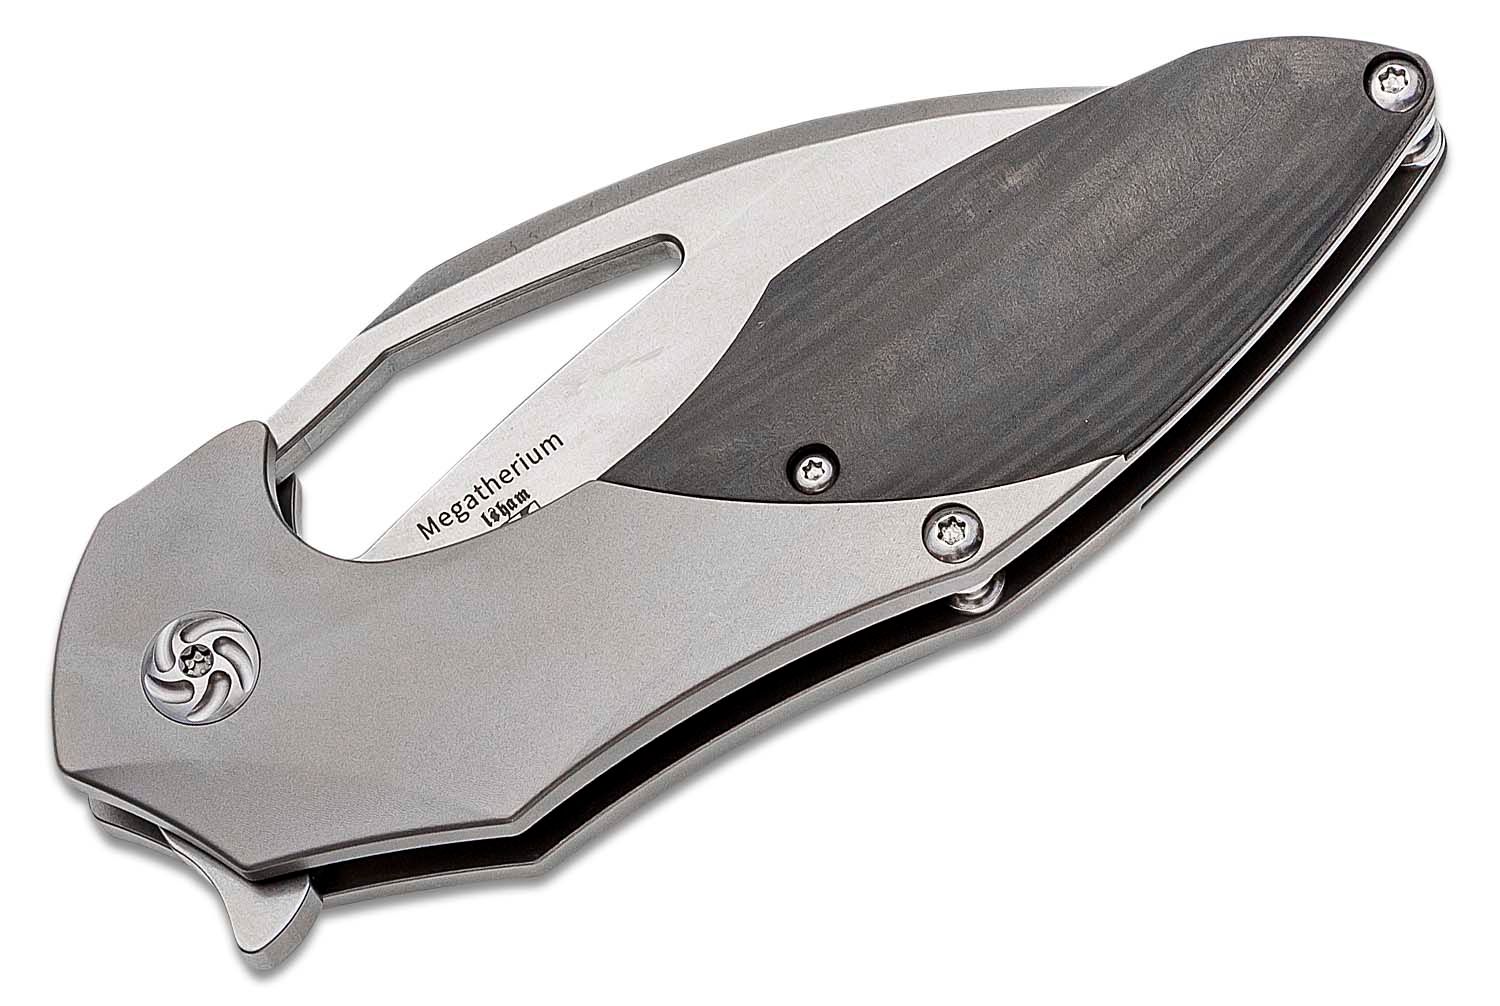 Limm Wrought Iron Knife - MY100525 - LARP Distribution